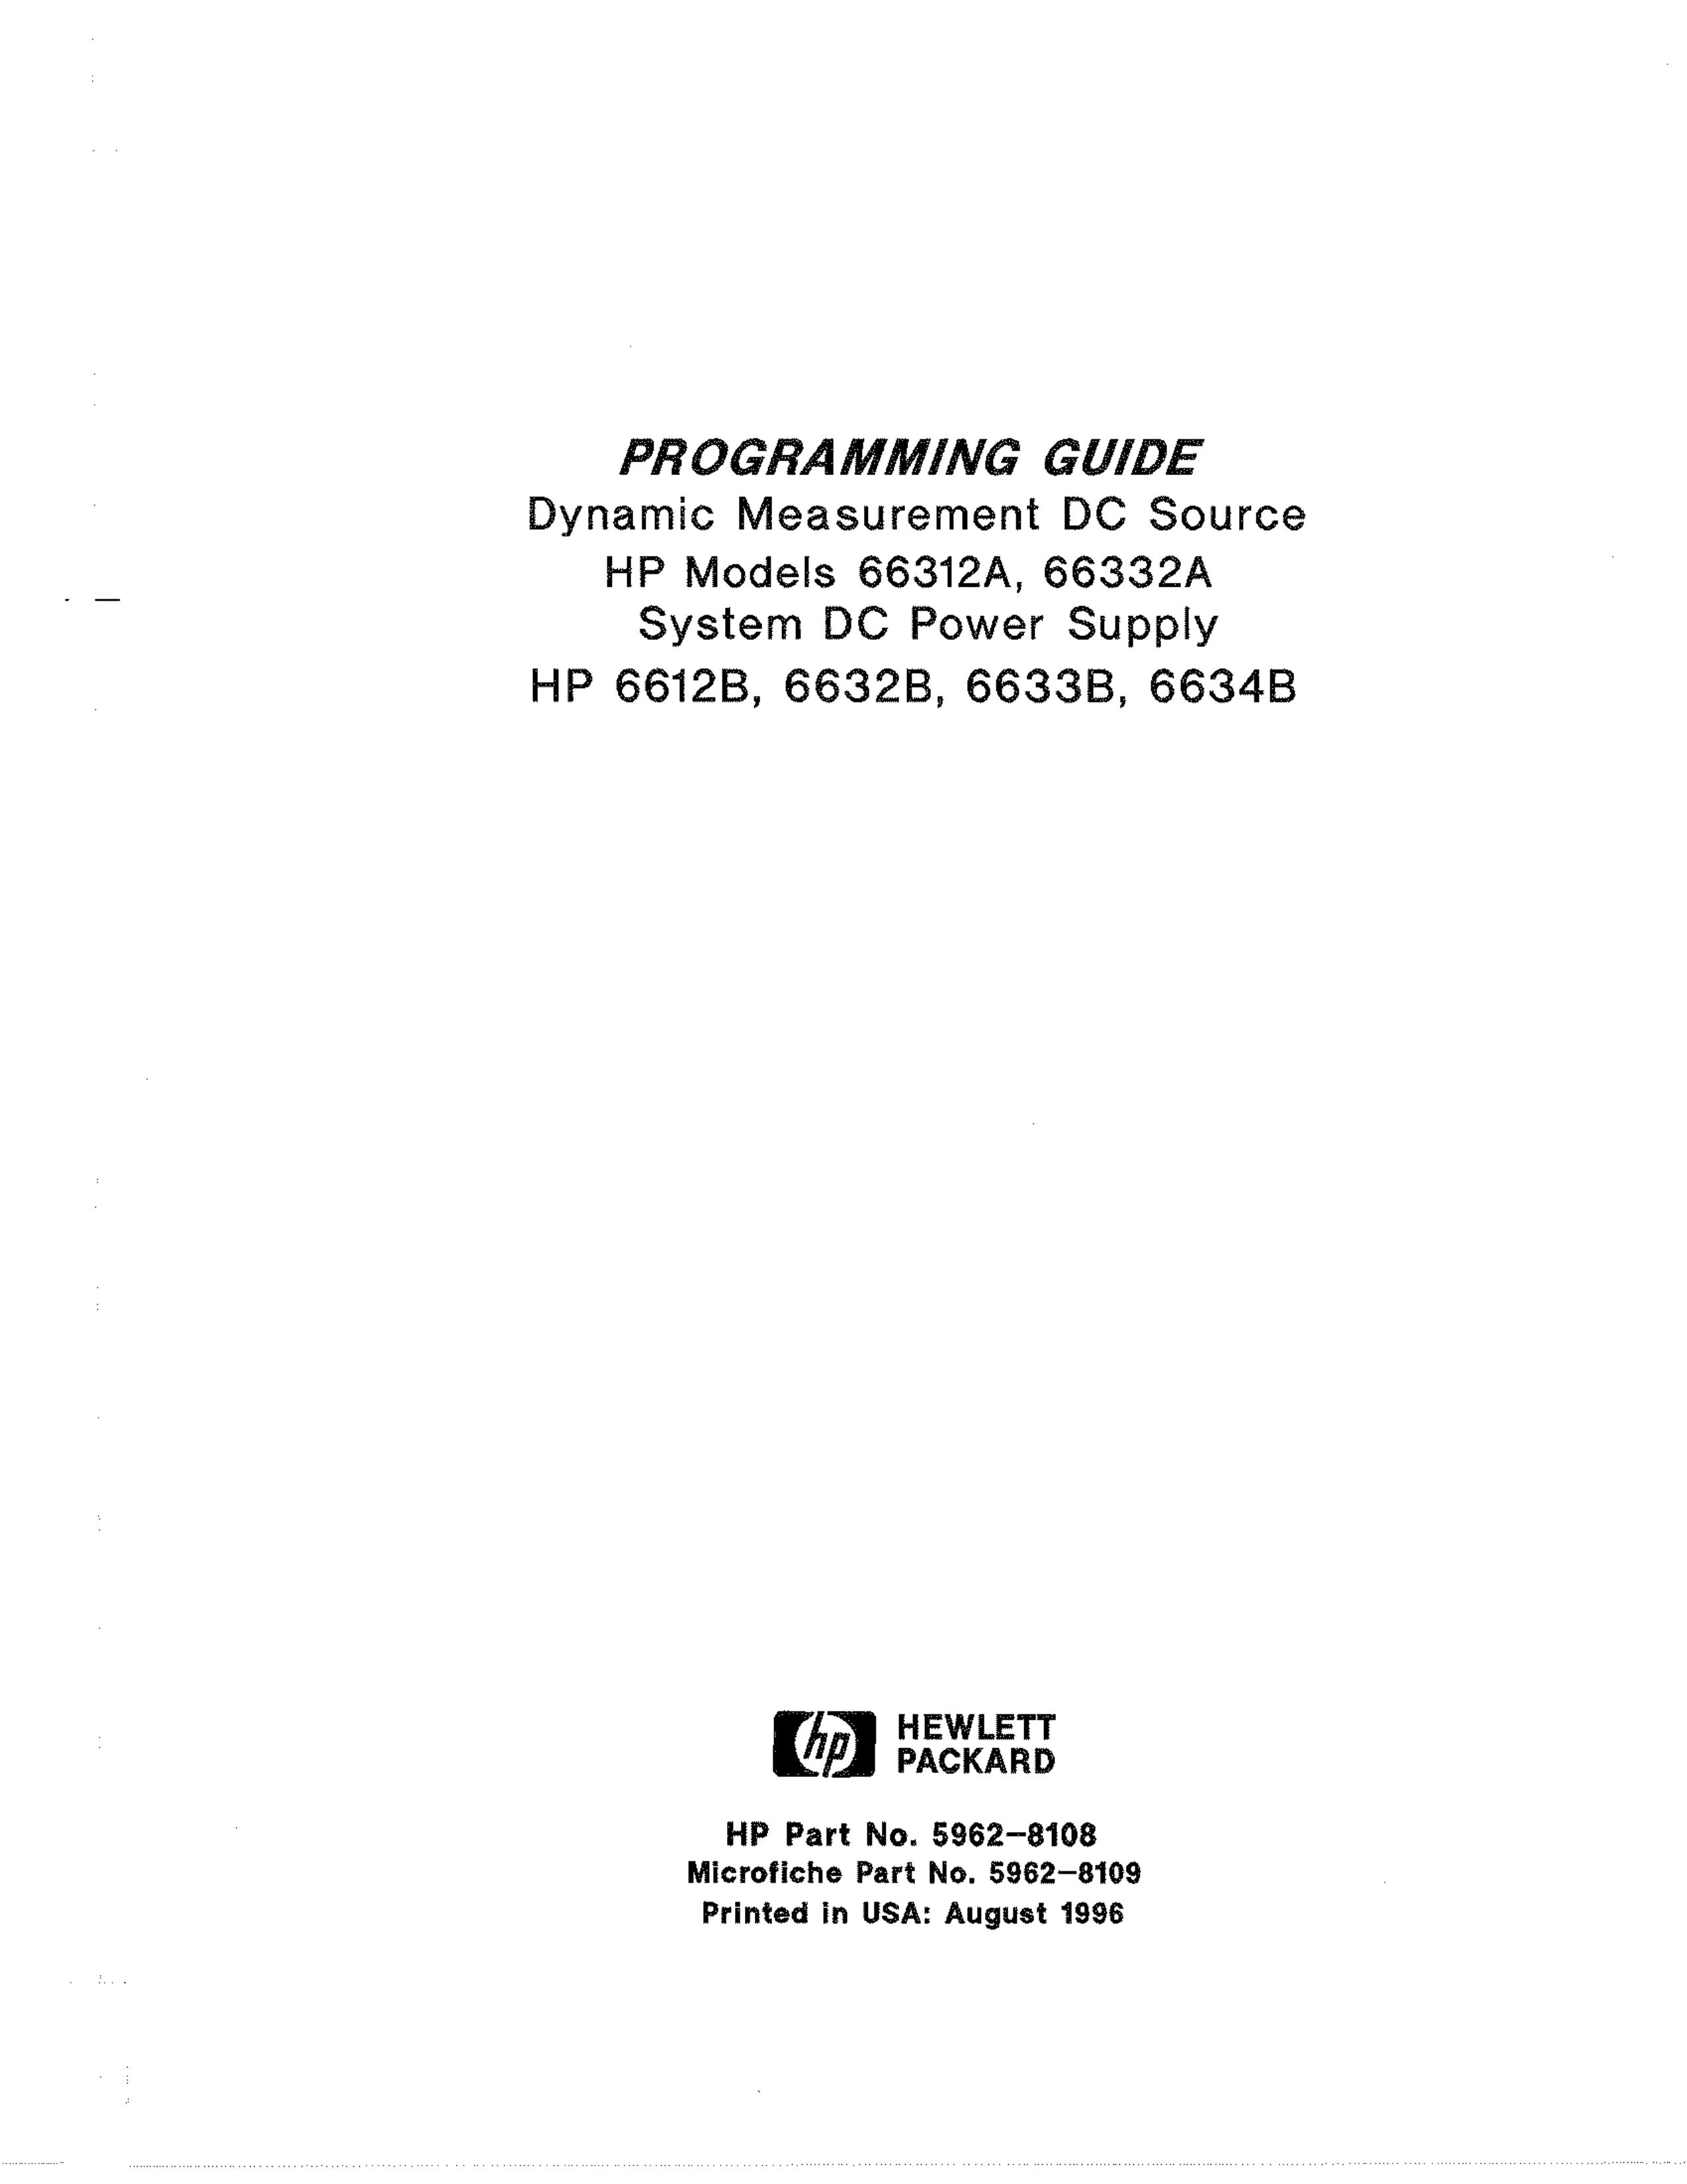 HP (Hewlett-Packard) HP6612B Microphone User Manual